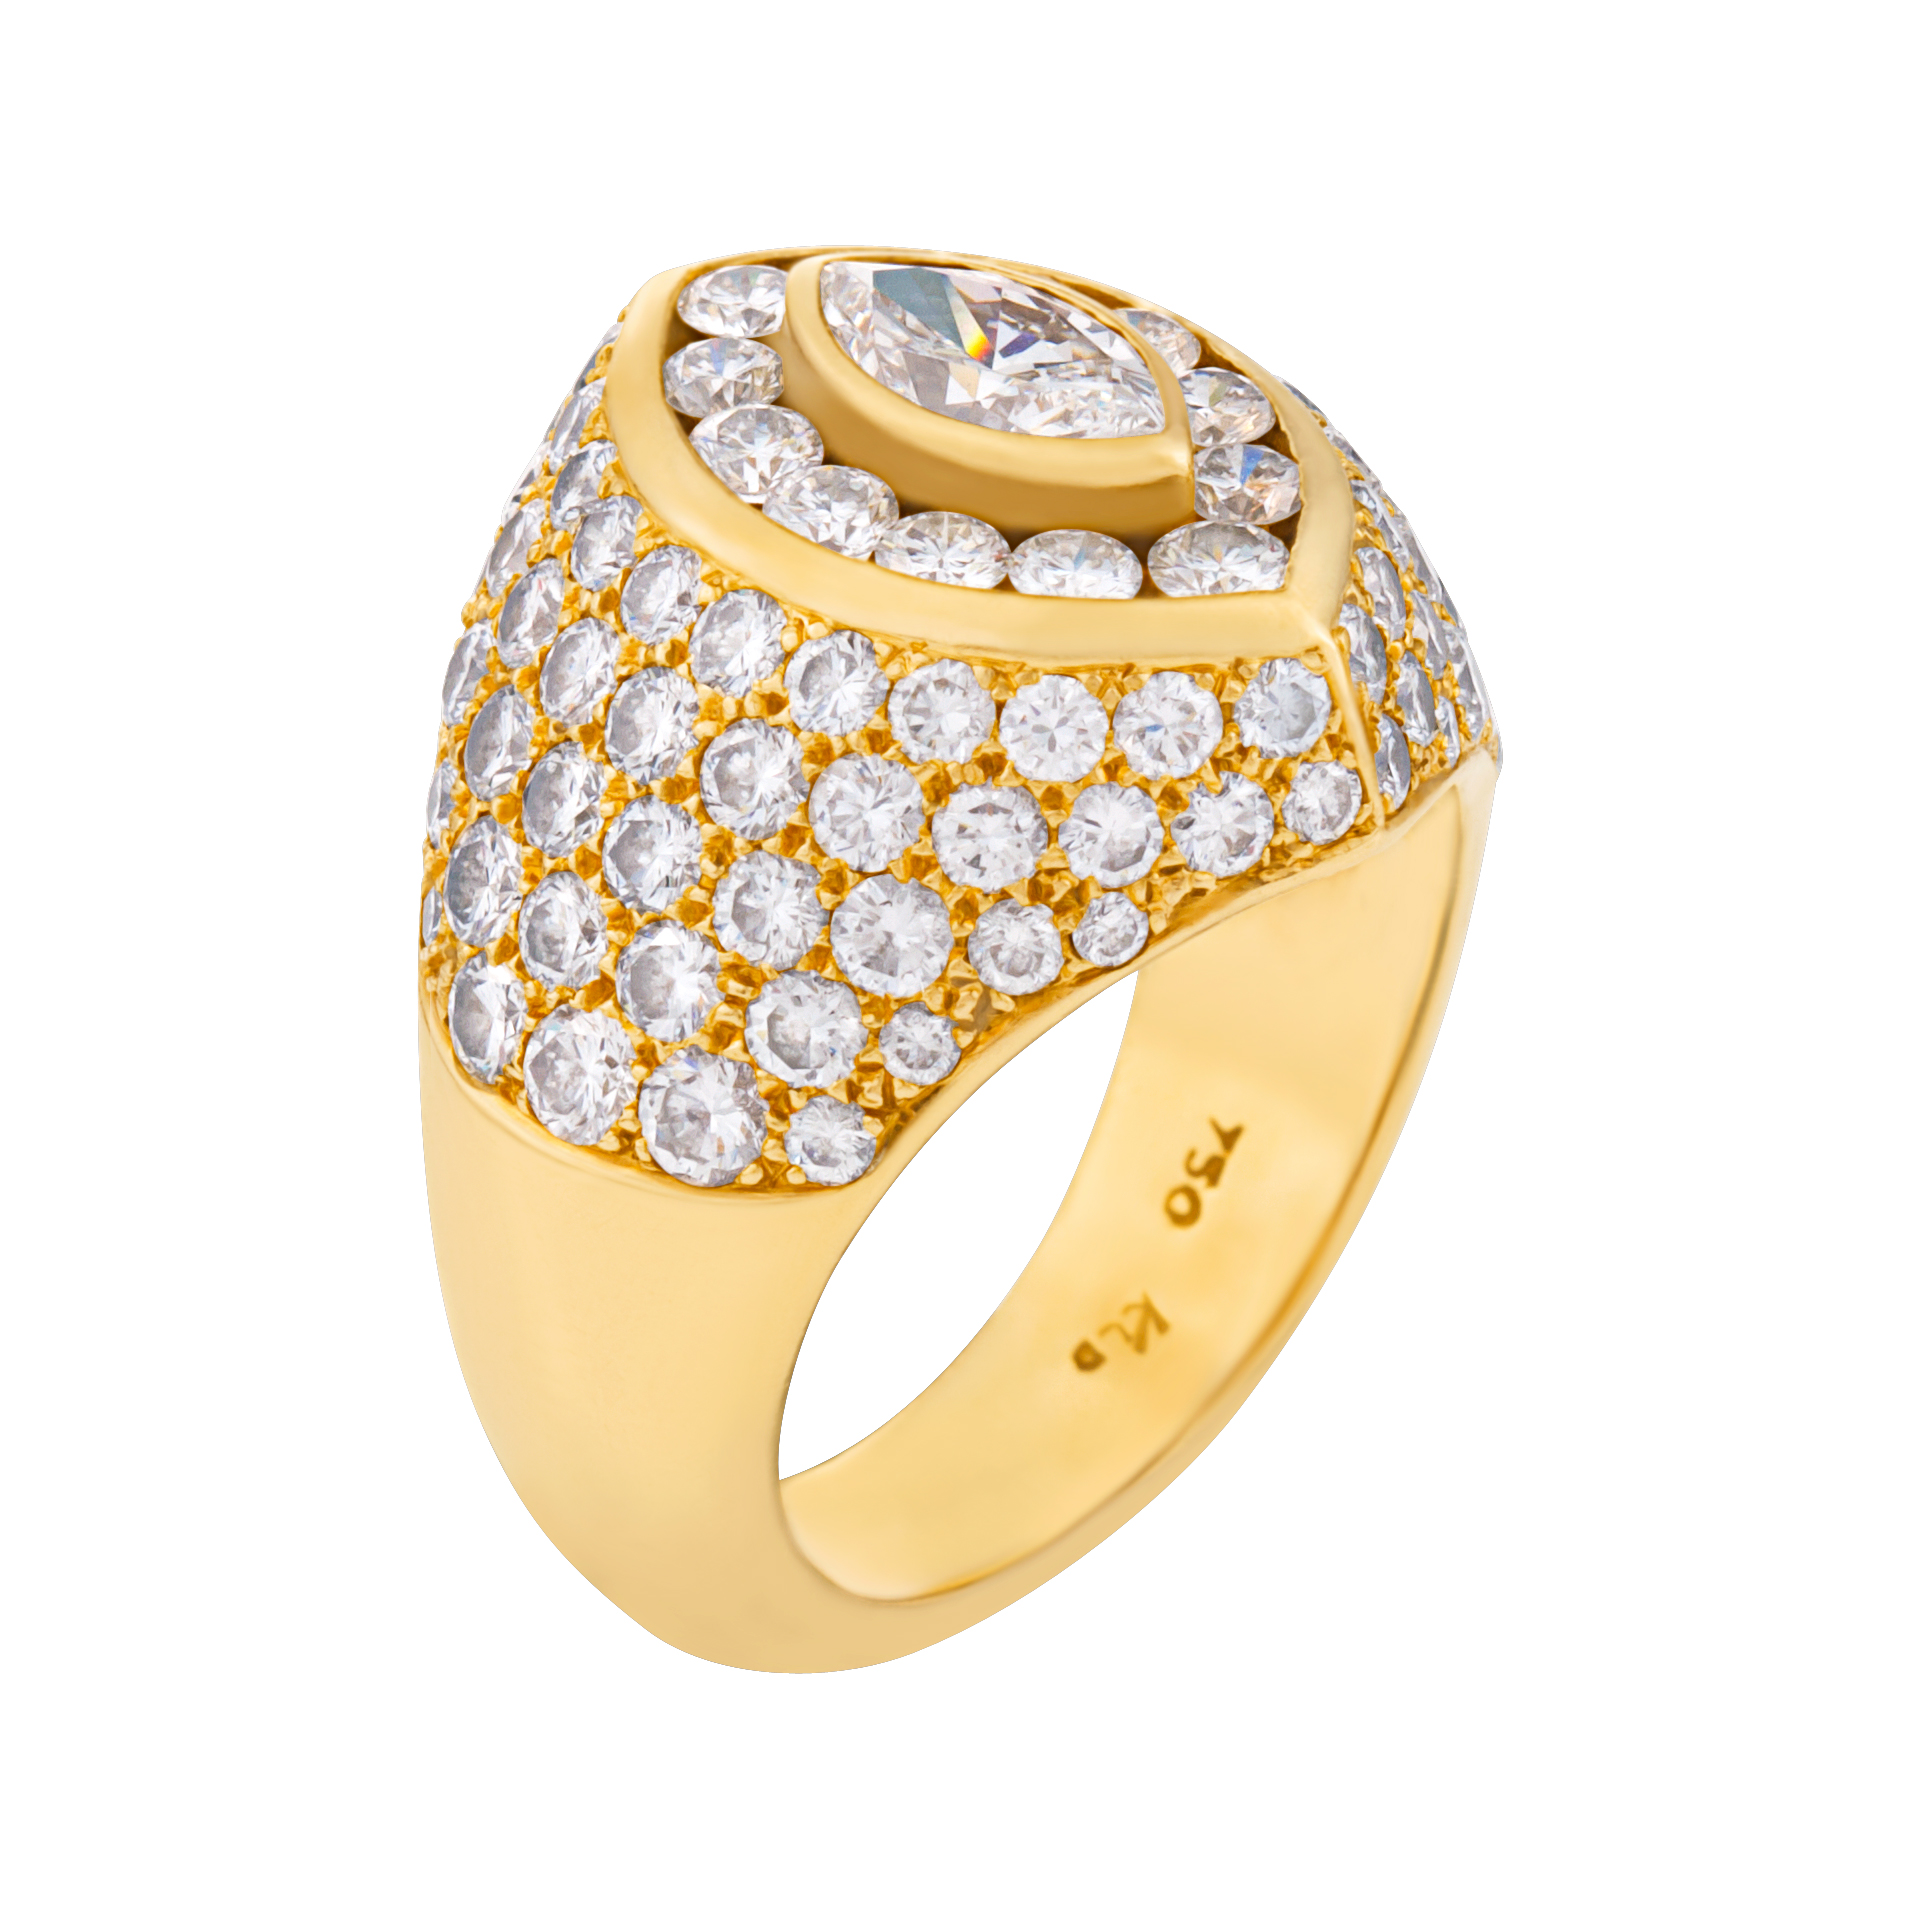 Kutchinsky 18K yellow gold diamond ring, total diamonds weight approx. 4.00 carats. All diamonds estimate E-F color, VVS clarity. image 4